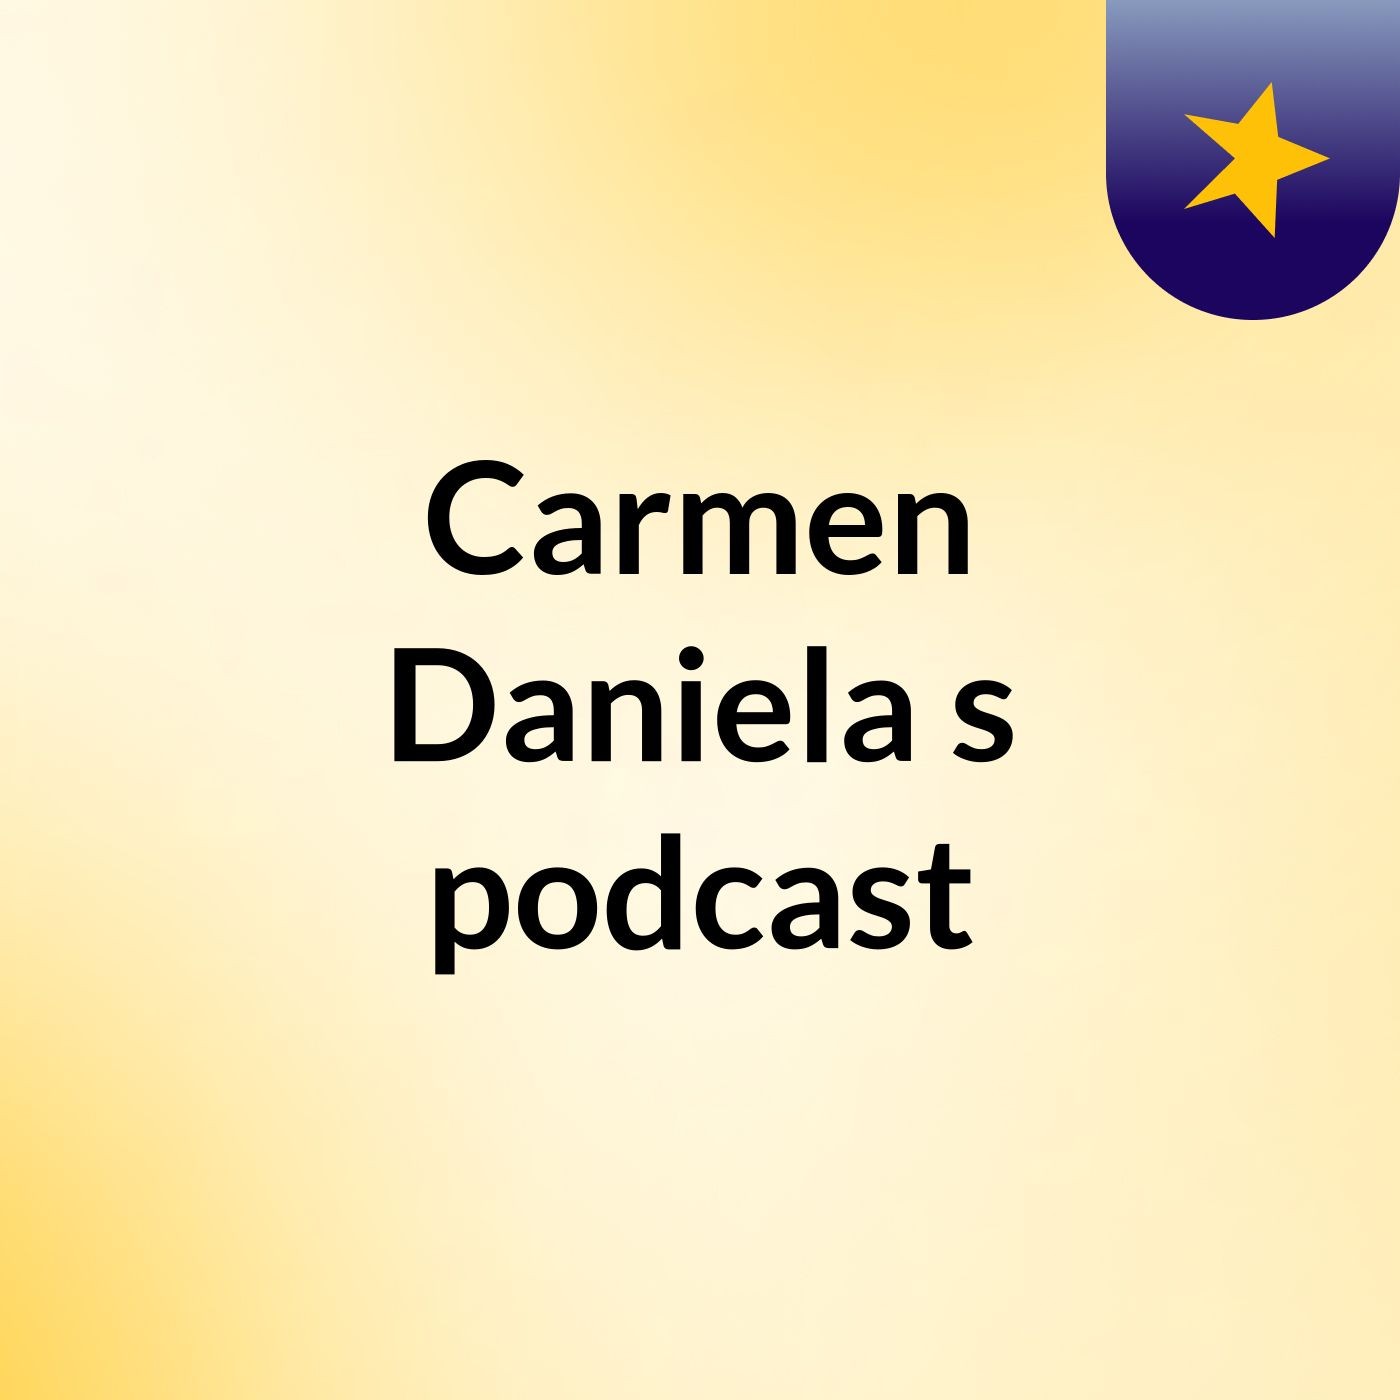 Carmen Daniela's podcast